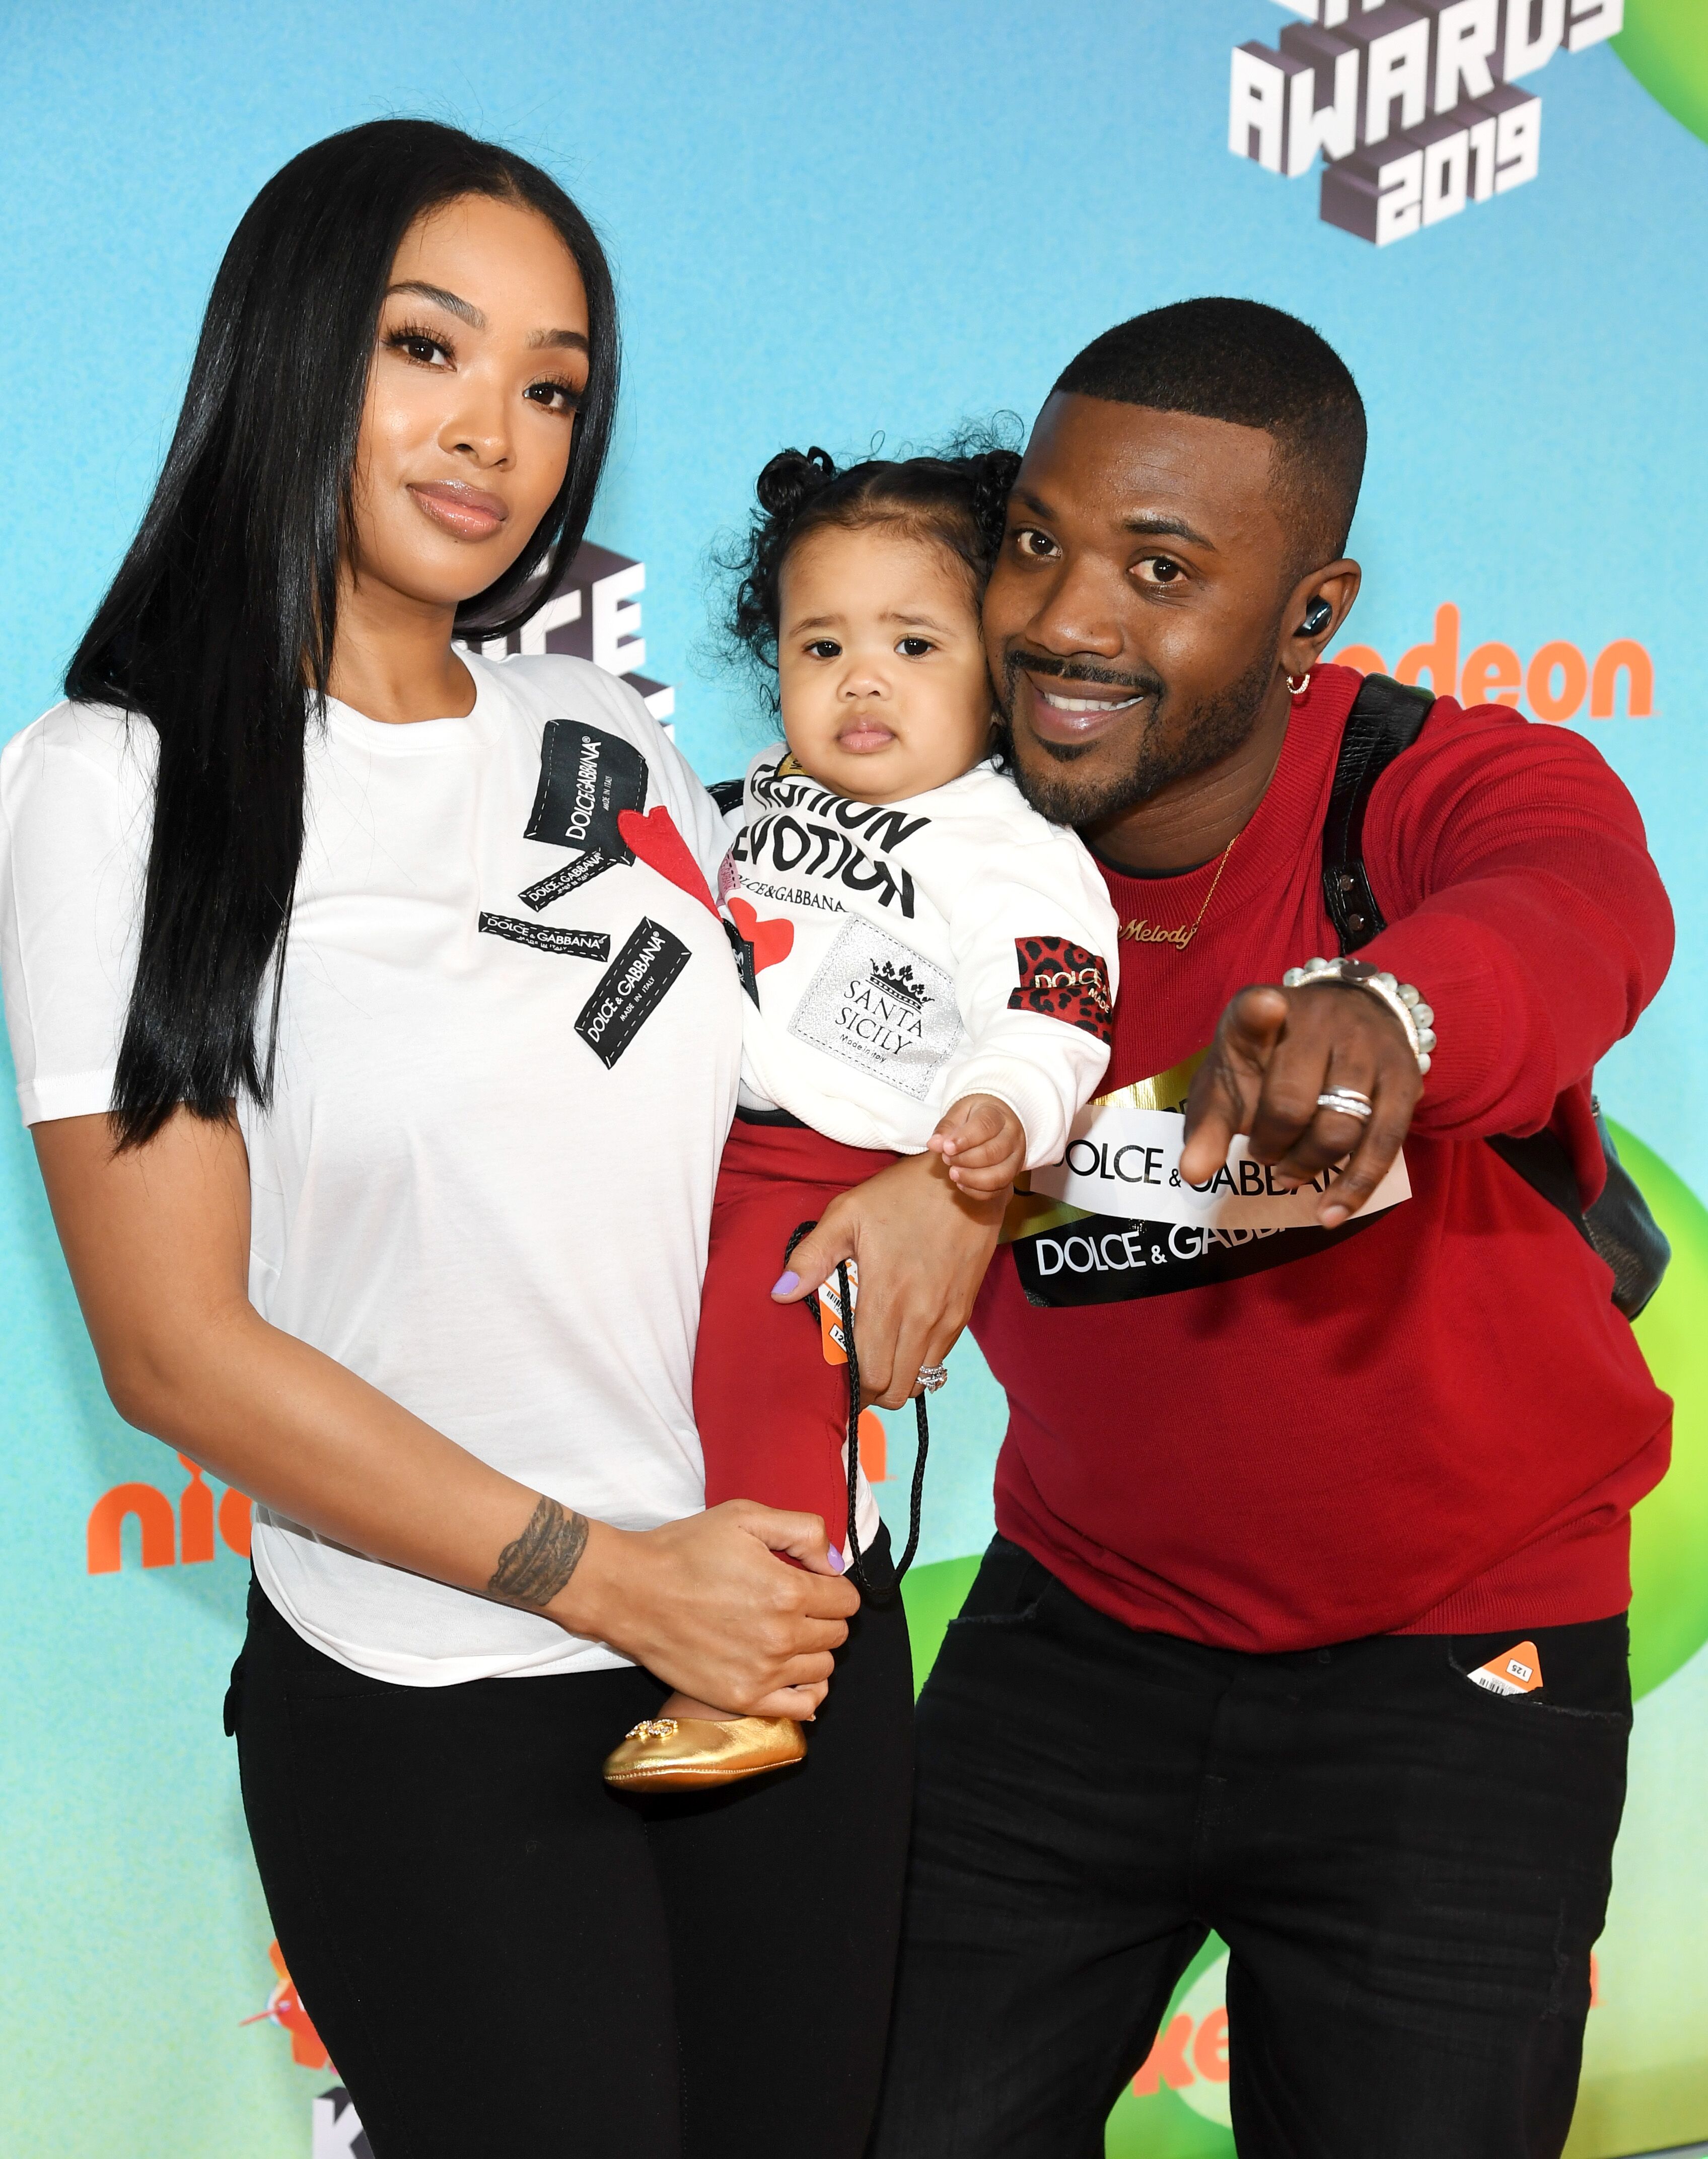 Princess Love, Melody Love and Ray J at the Nickelodeon Awards 2019| Photo: Getty Images